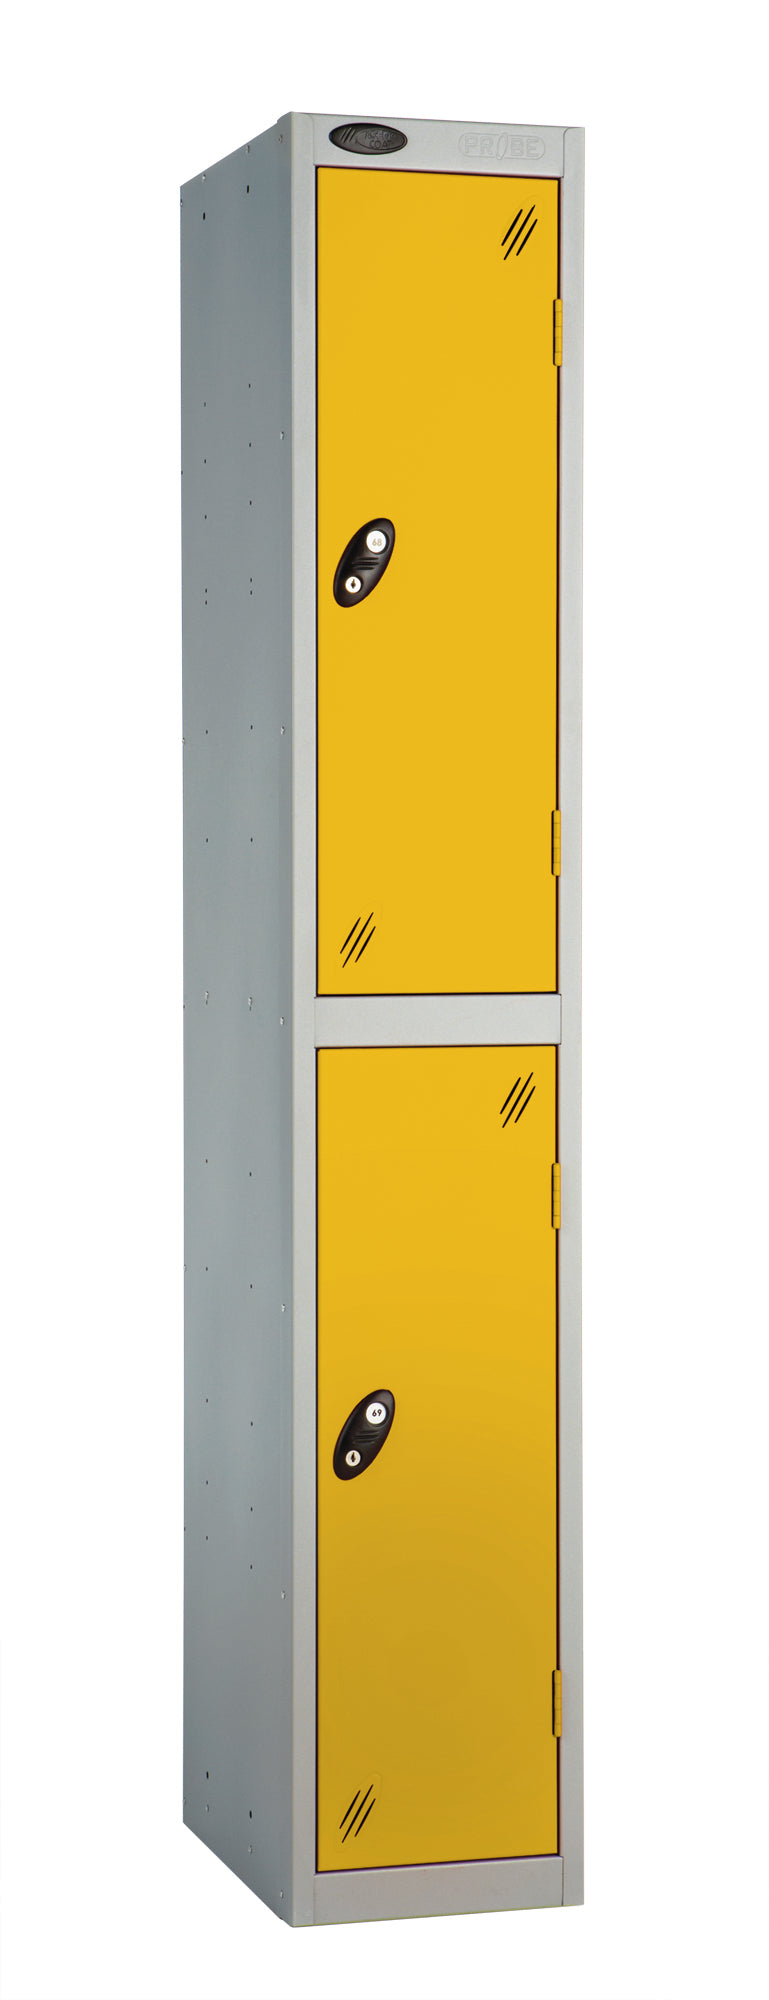 PROBEBOX STANDARD 1 NEST STEEL LOCKERS - ROYAL YELLOW 2 DOOR Storage Lockers > Lockers > Cabinets > Storage > Probe > One Stop For Safety   